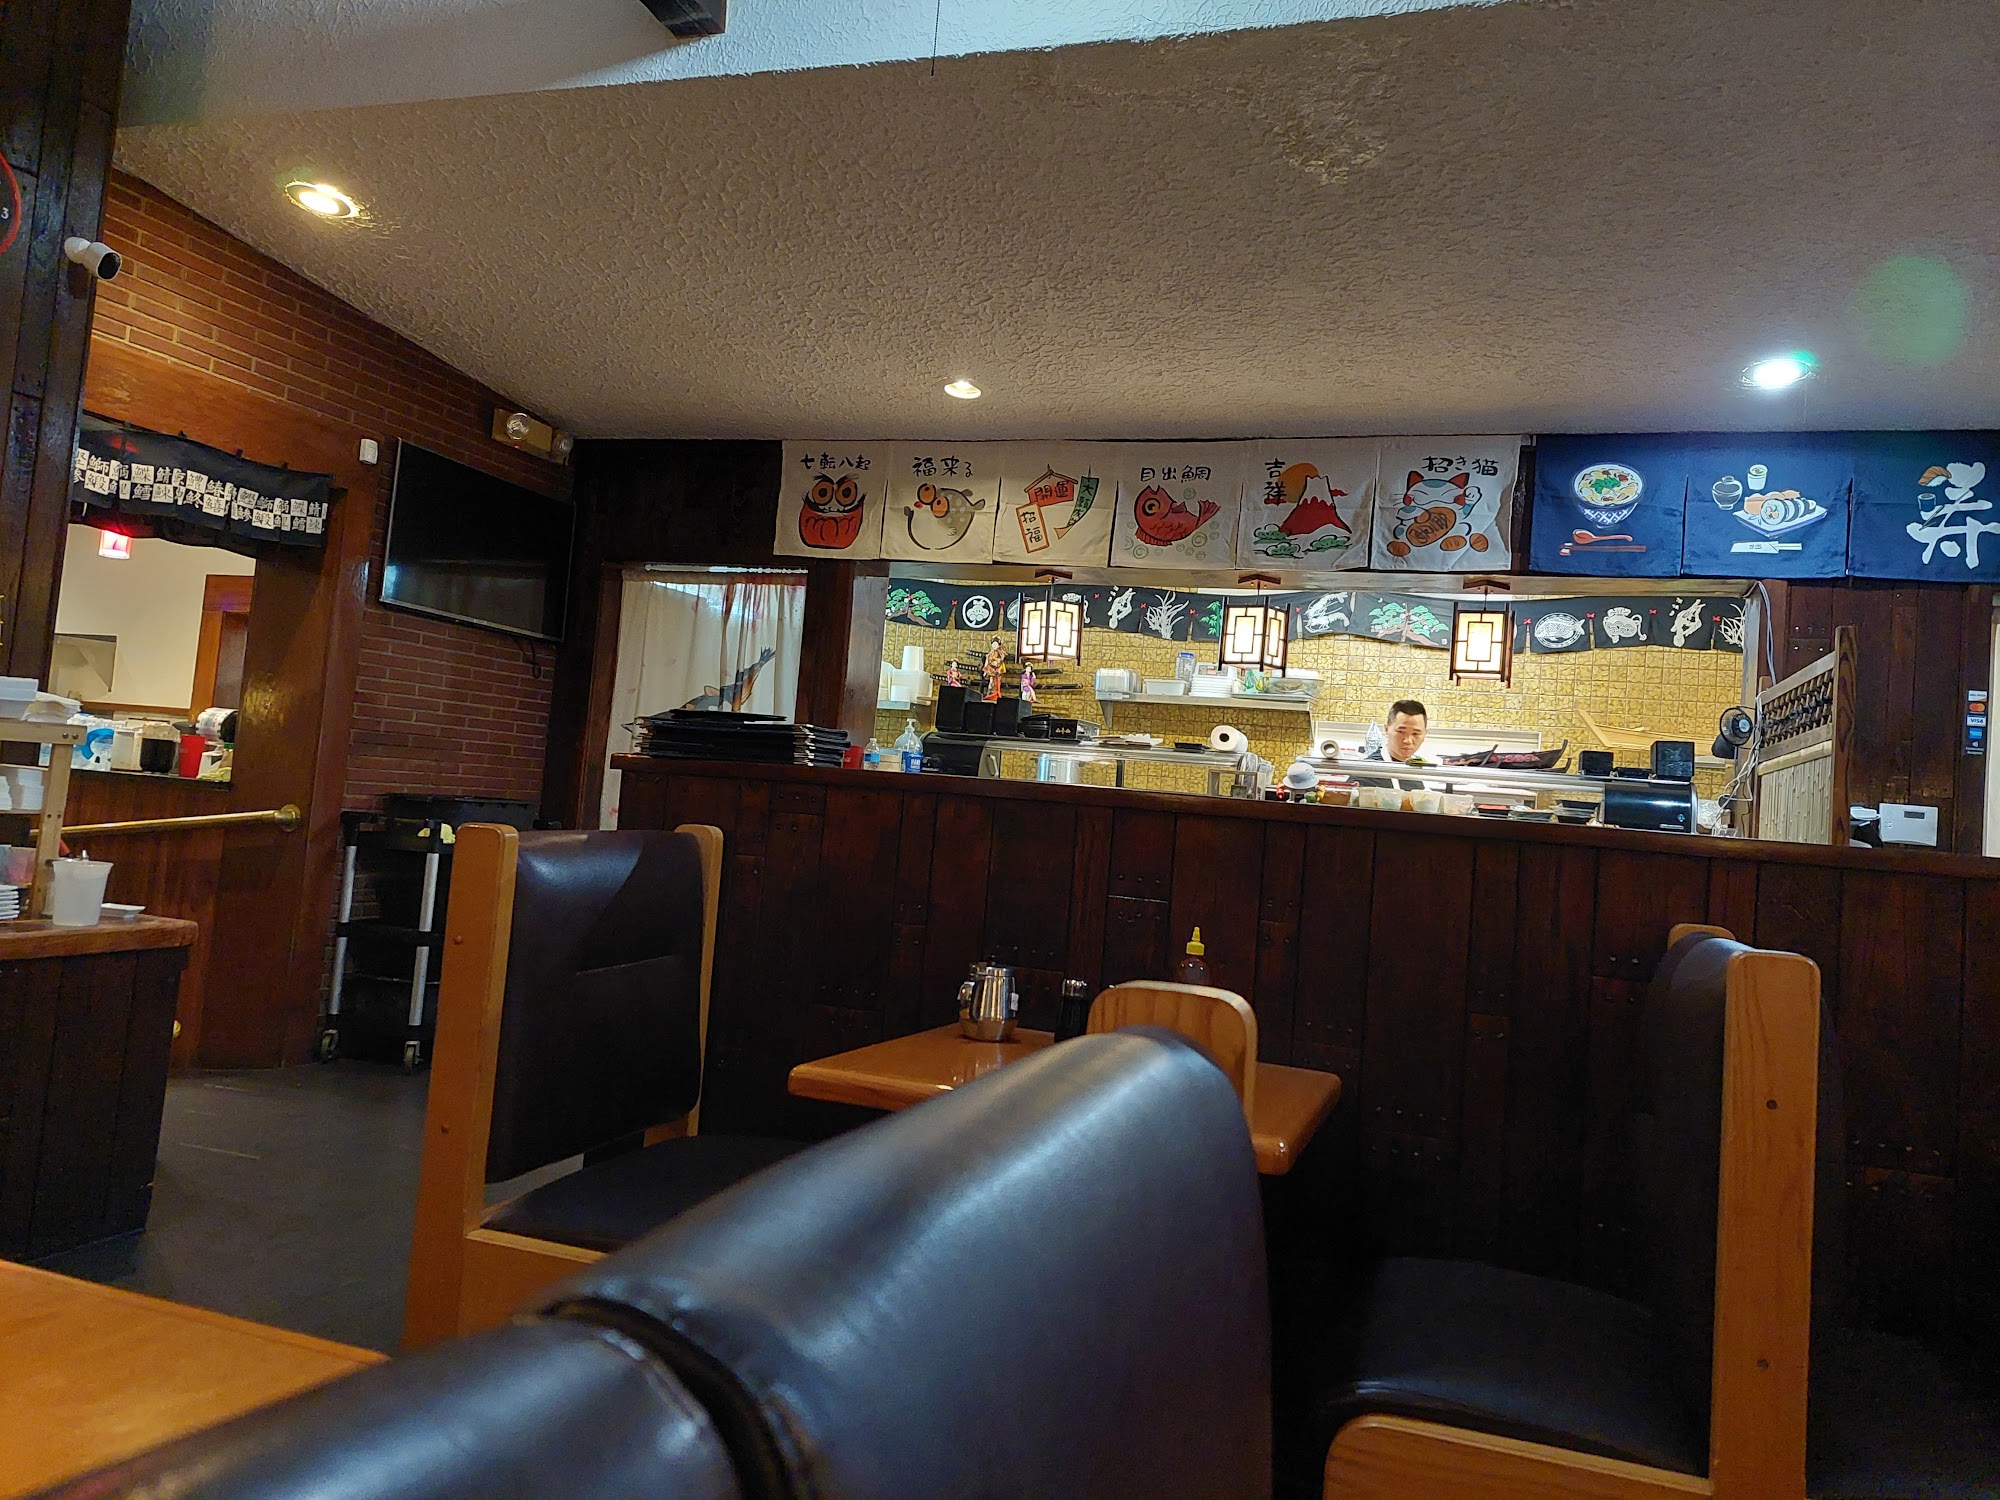 Fuji and Pho Cafe